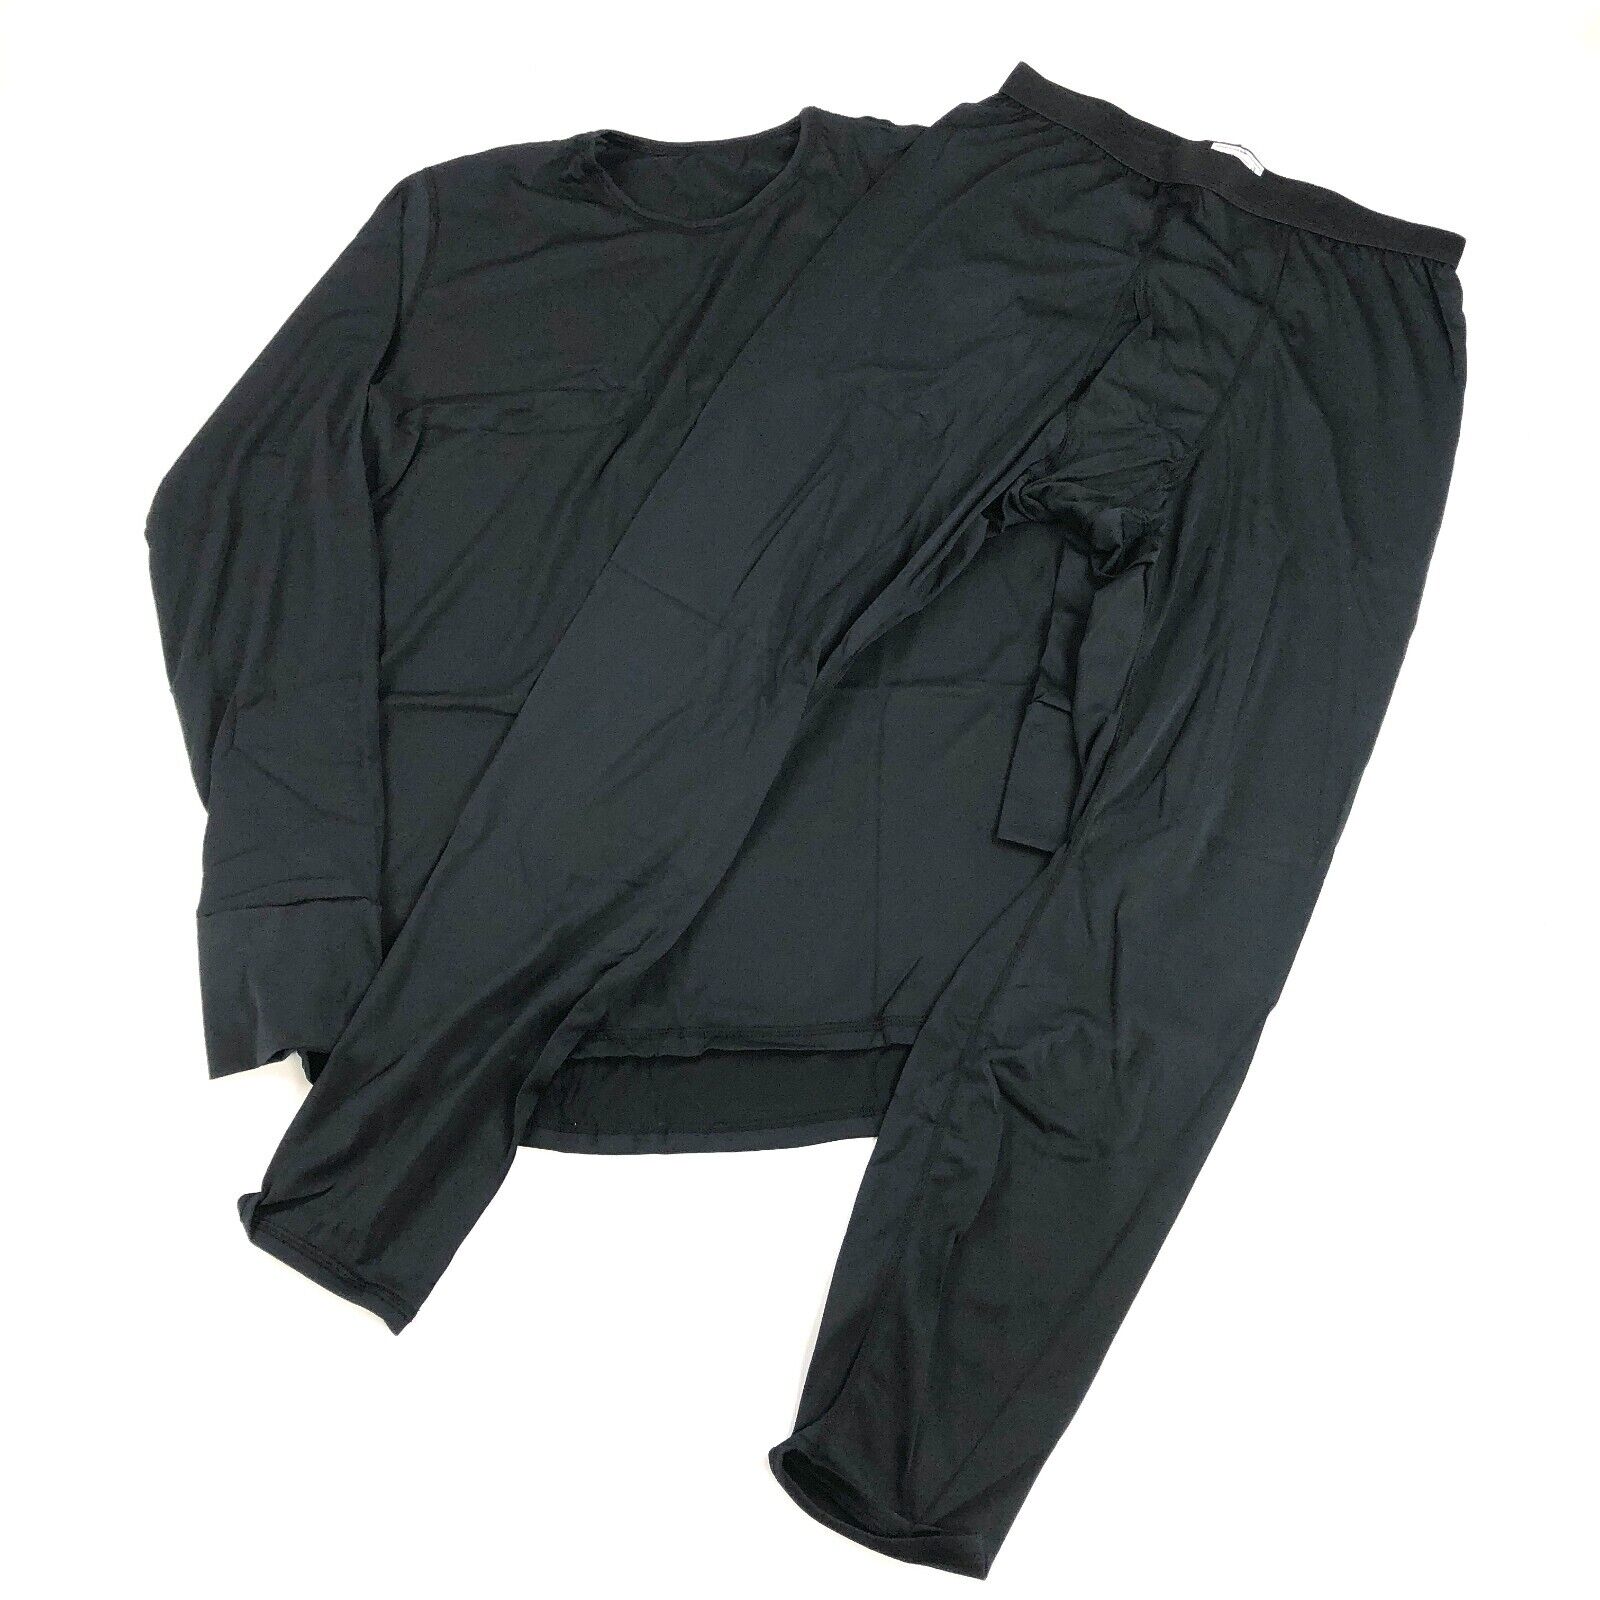 USGI Polartec Level 1 Layer Thermal Set Black Undershirt & Pants MEDIUM REGULAR